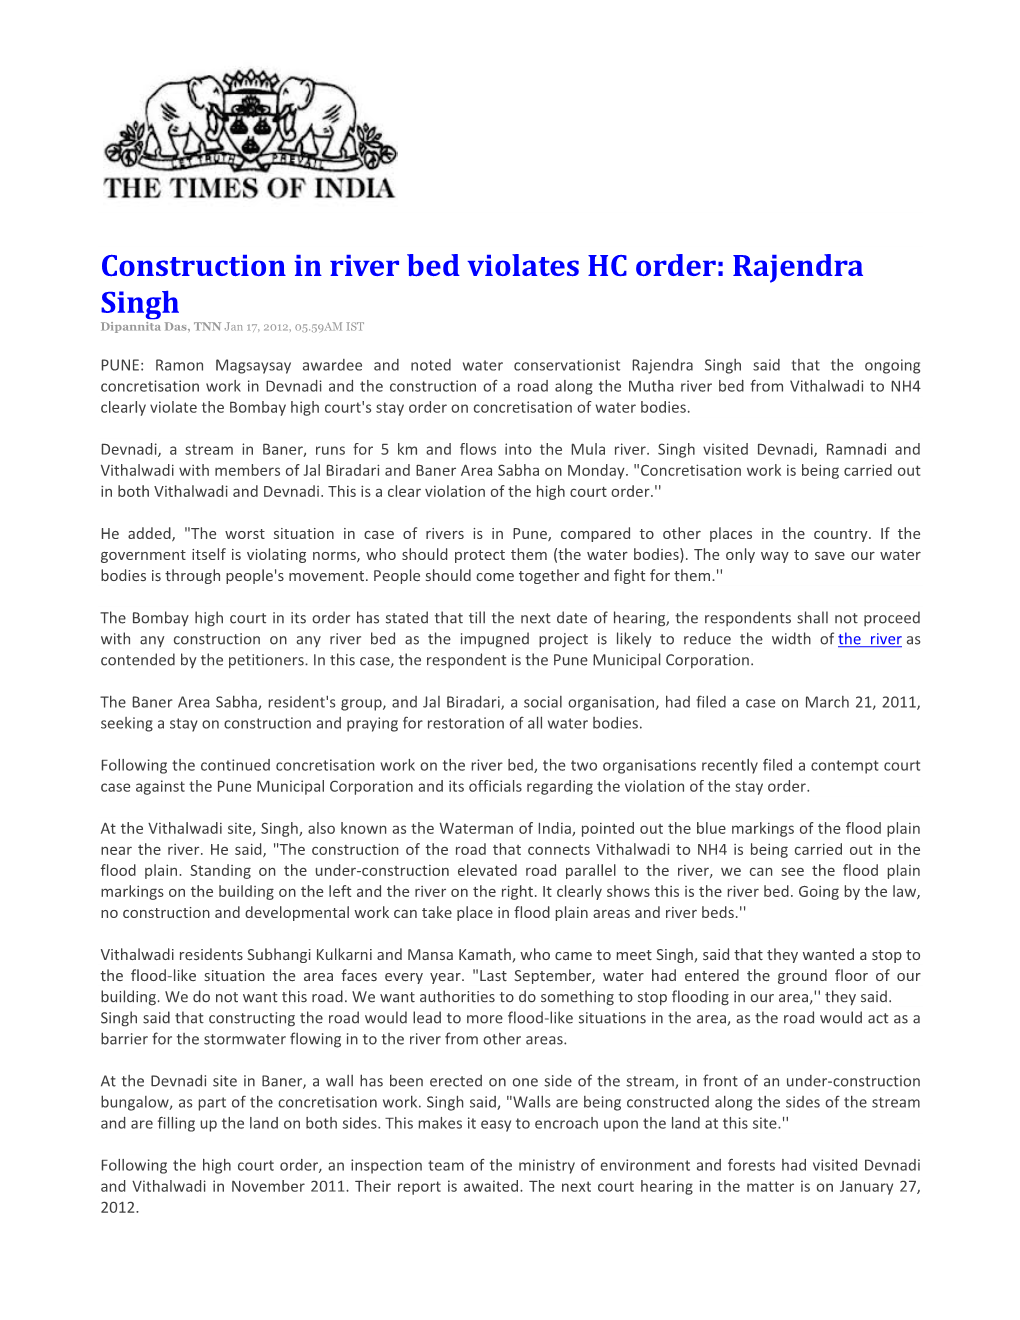 Construction in River Bed Violates HC Order: Rajendra Singh Dipannita Das, TNN Jan 17, 2012, 05.59AM IST